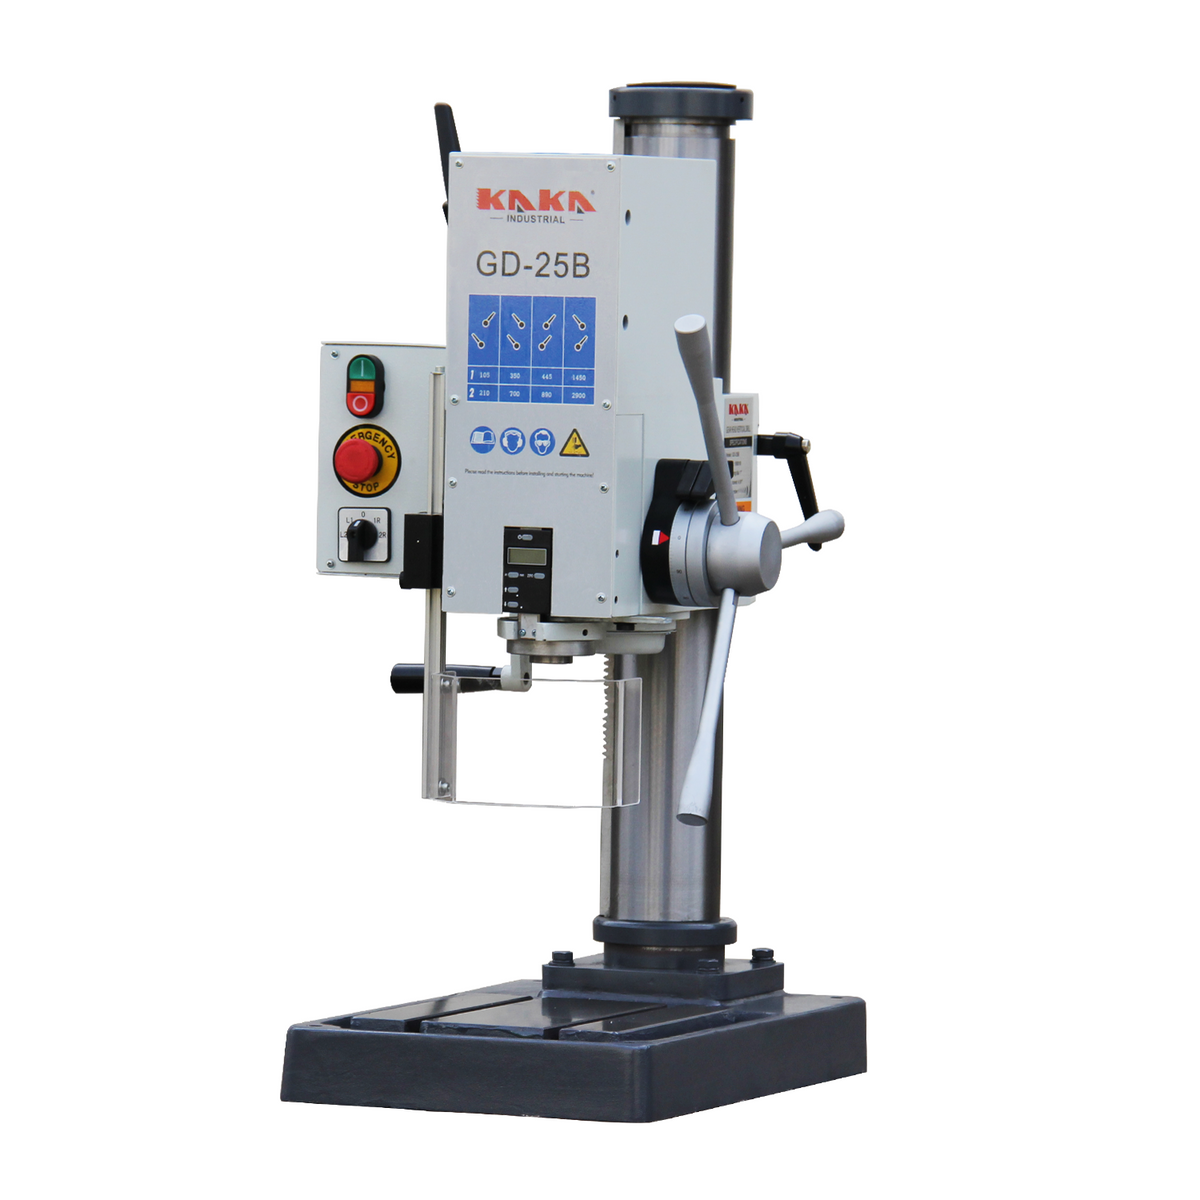 KAKA Industrial GD-25B Gear Head Vertical Drill Press, 8 Steps Speed A